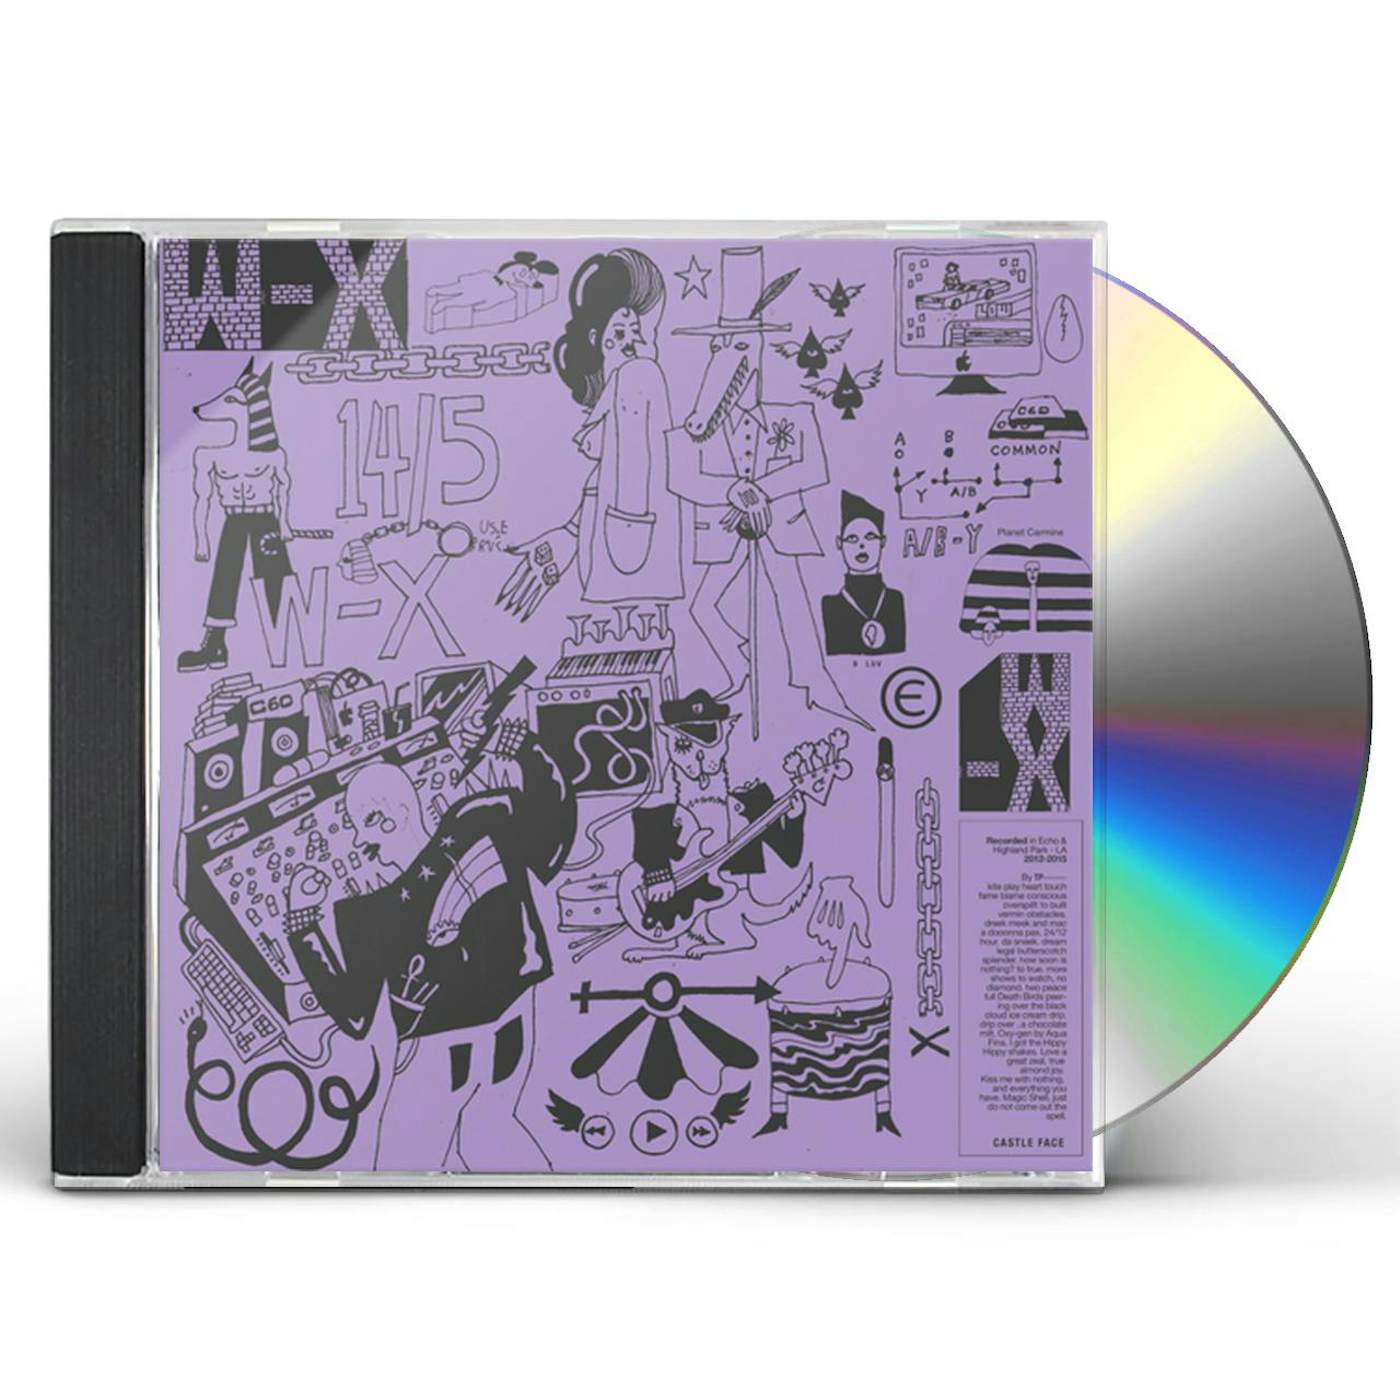  THE ALBUM [Version 4]: CDs y Vinilo